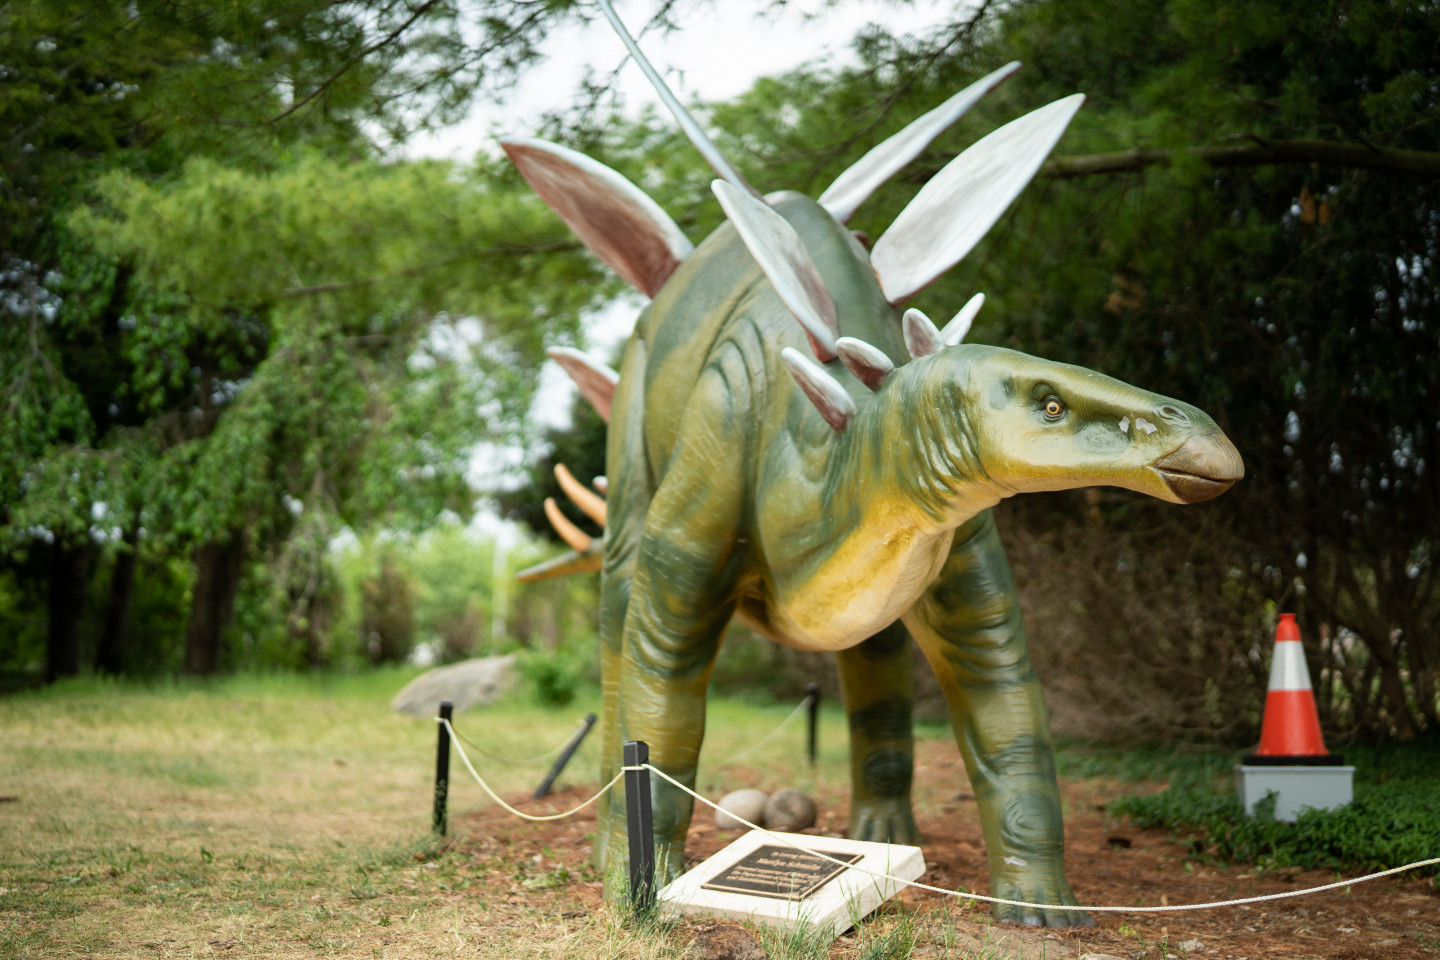 A stegosaurus statue.